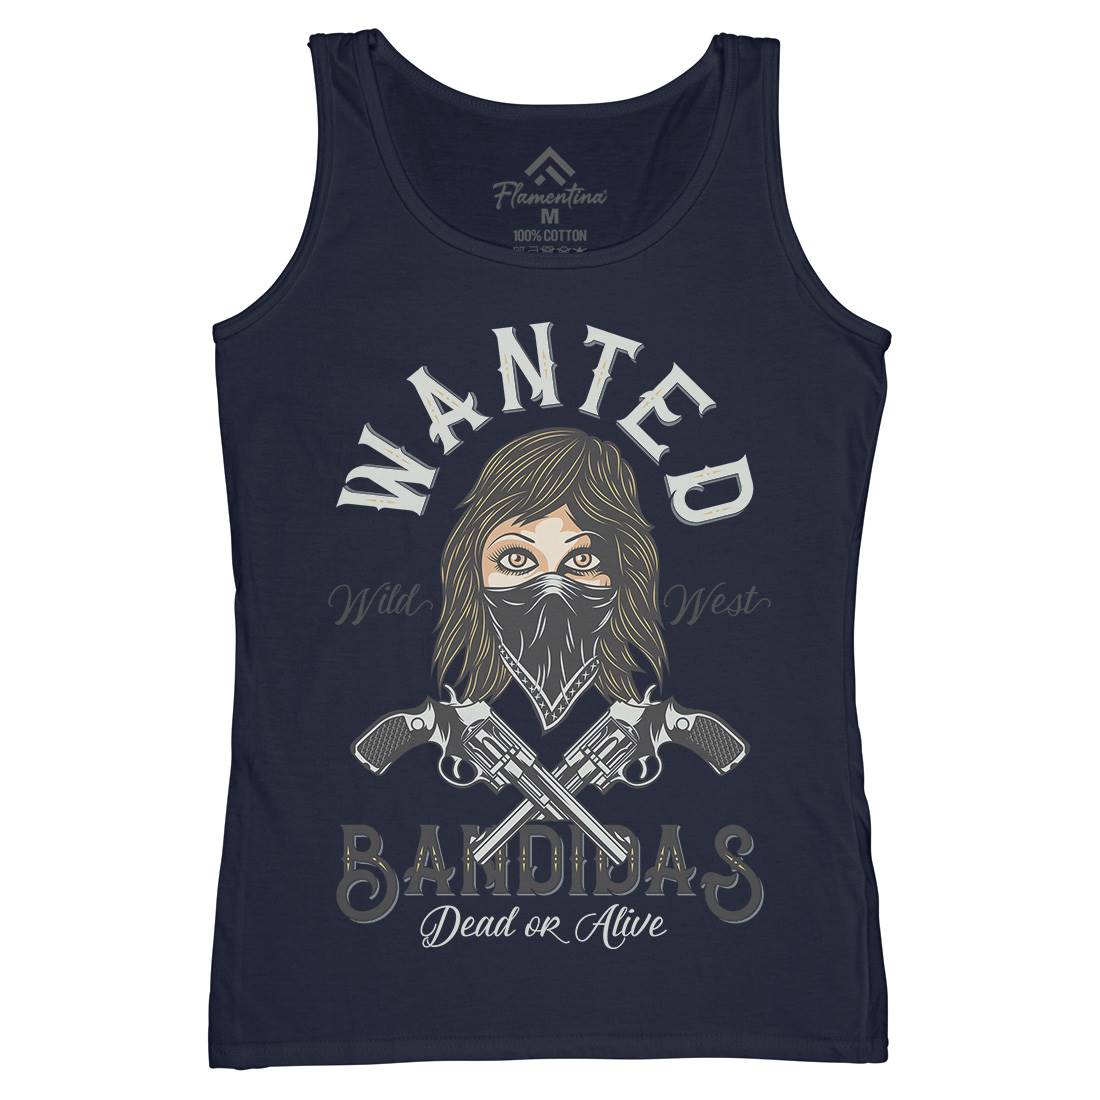 Wanted Bandidas Womens Organic Tank Top Vest Retro D995